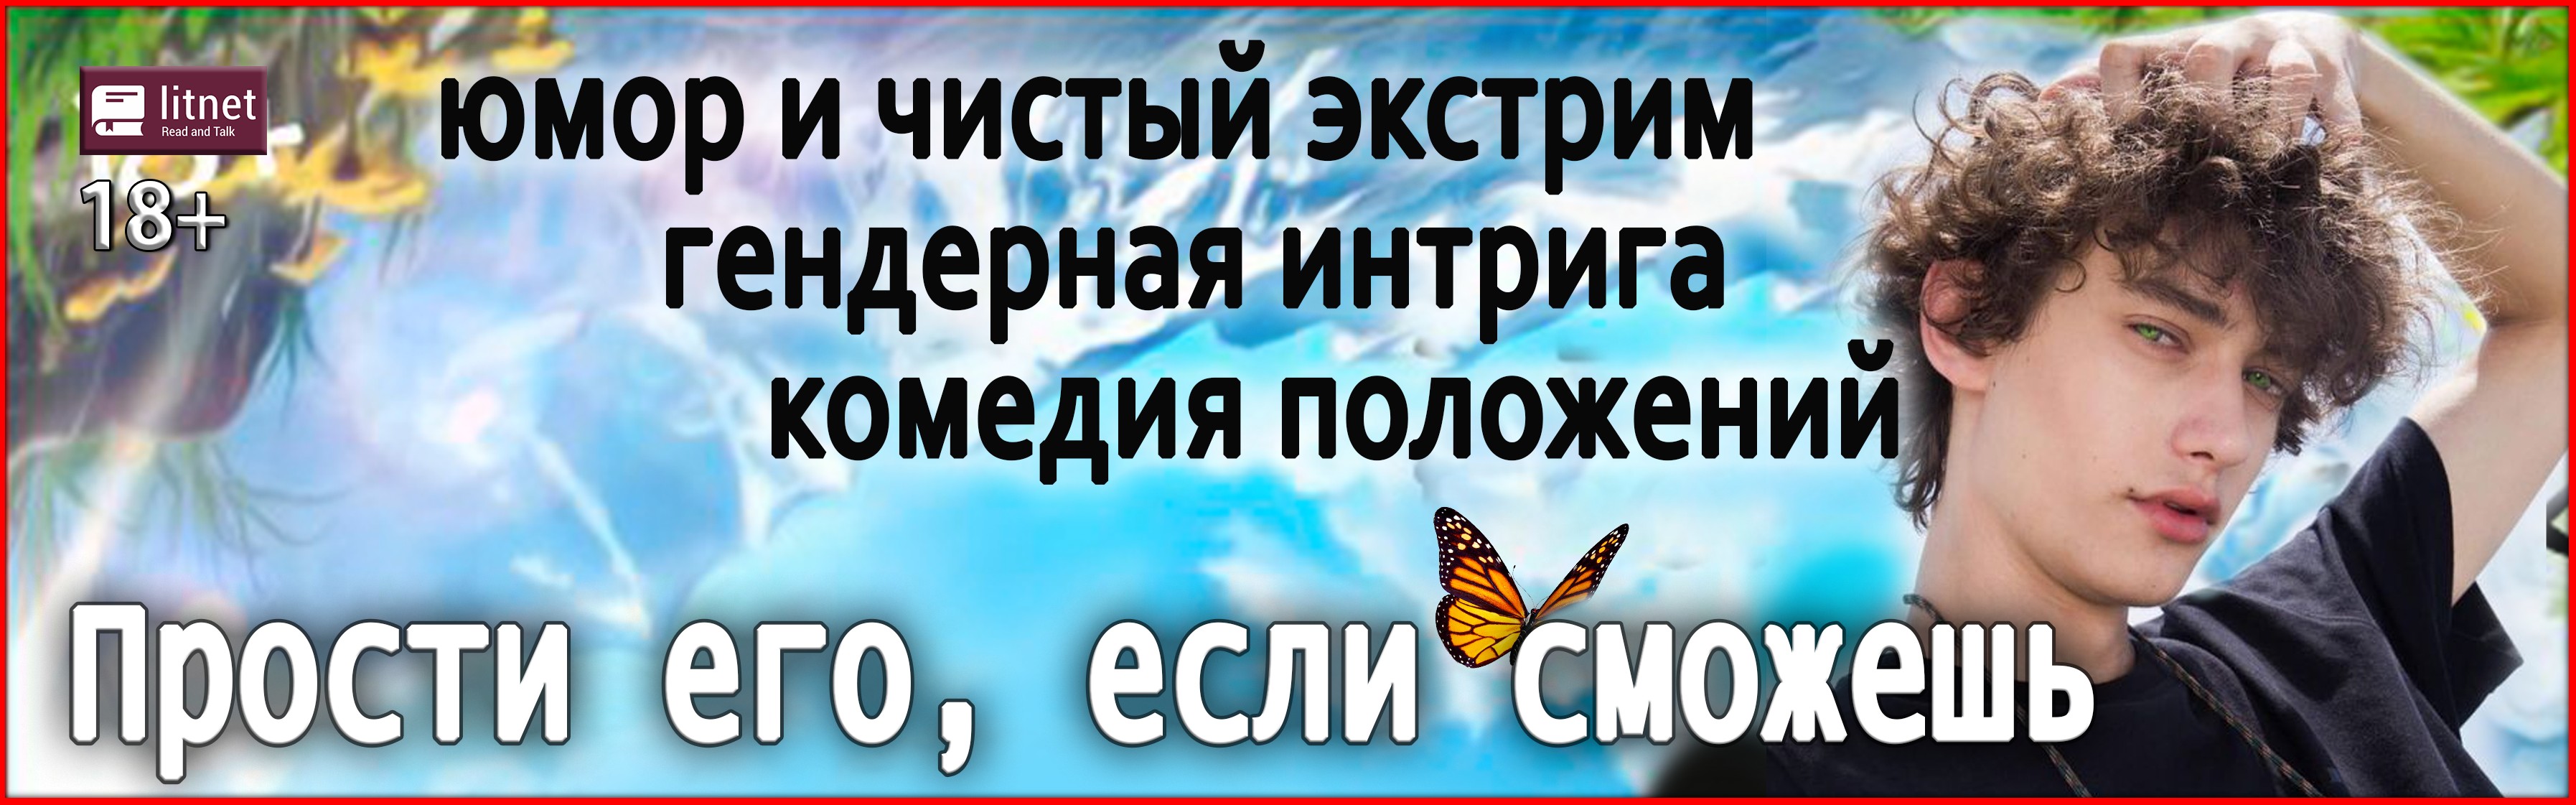 http://samlib.ru/img/b/braniwshuk_o_i/srm/myshko2320h1005yyych.jpg